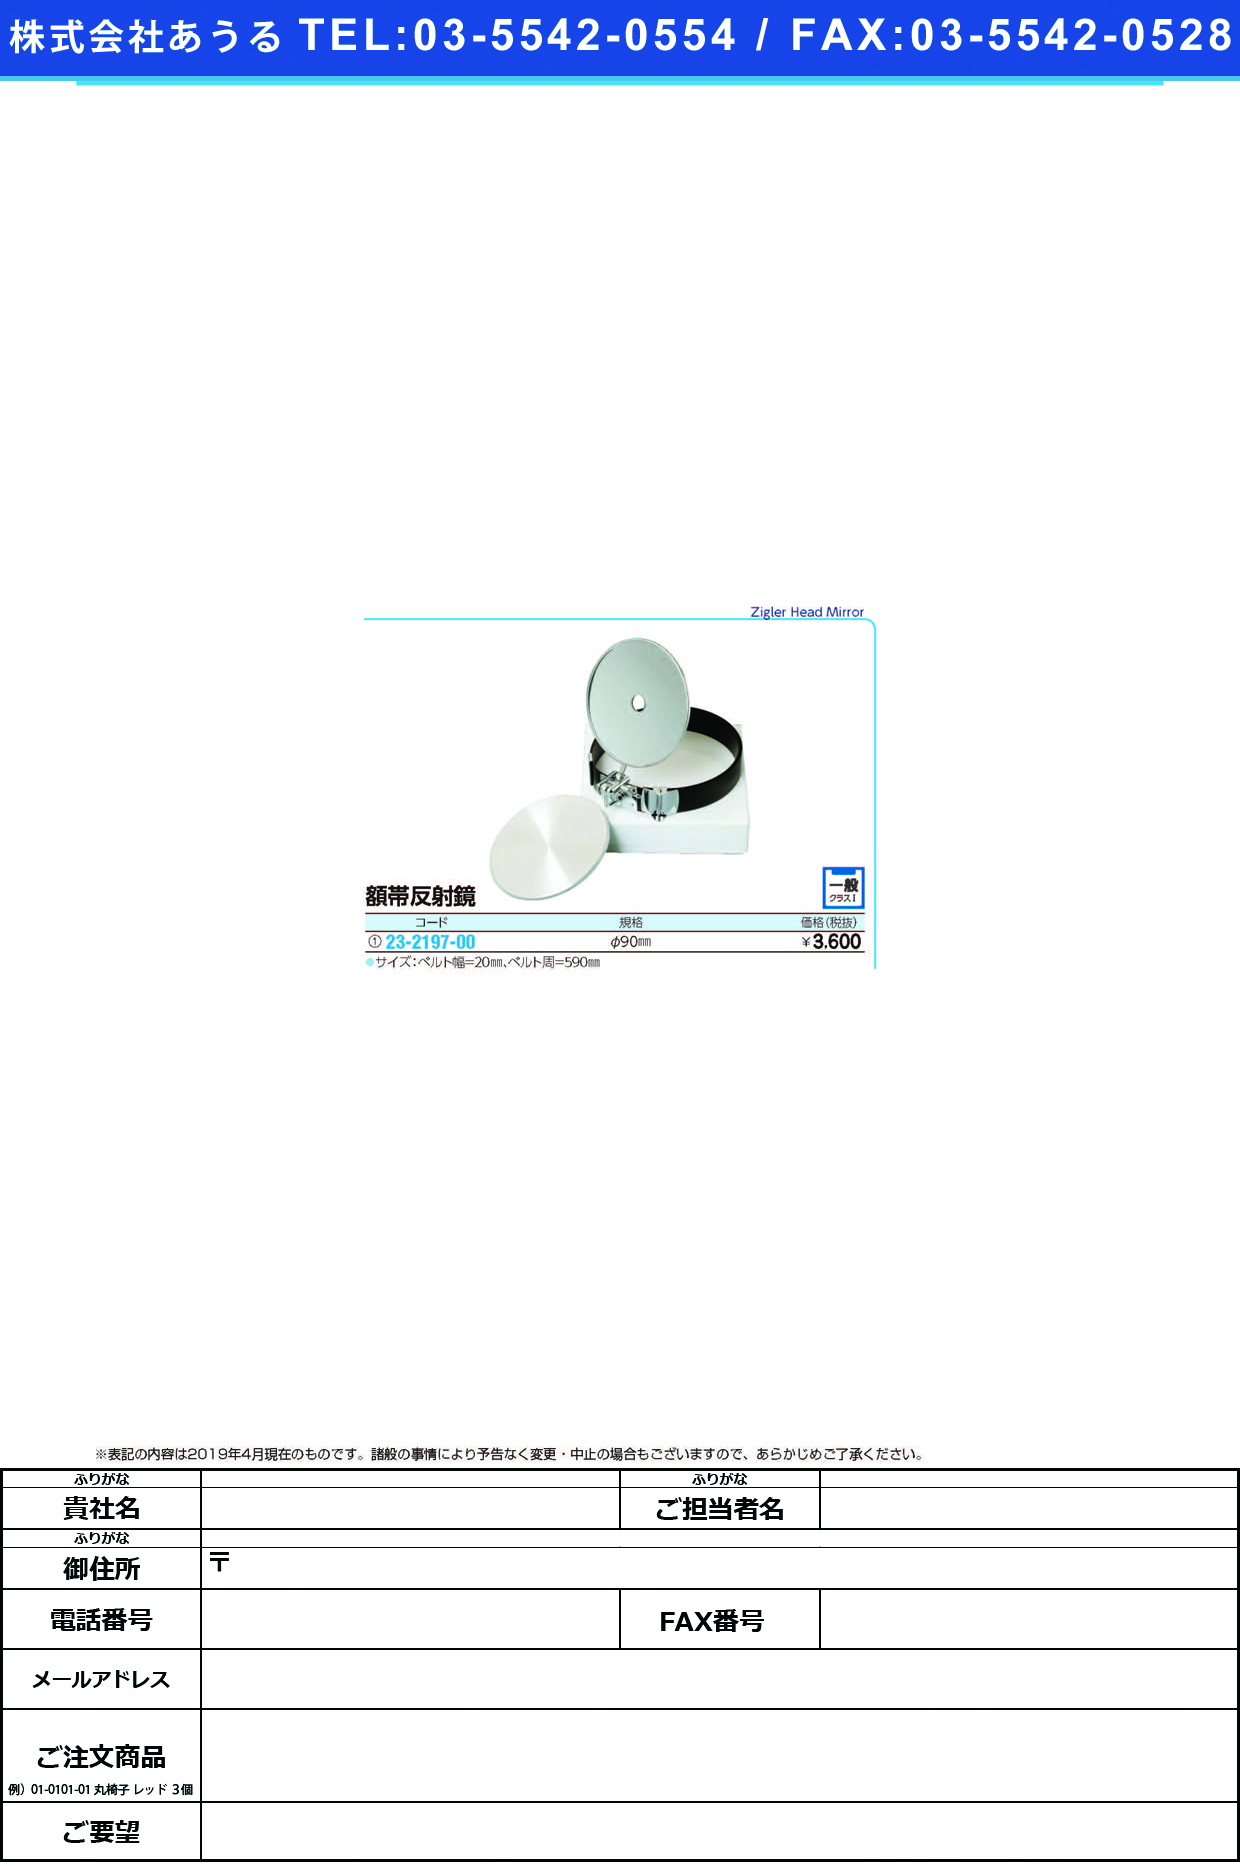 (23-2197-00)額帯反射鏡 NO.R-10026 ｶﾞｸﾀｲﾊﾝｼｬｷｮｳ【1個単位】【2019年カタログ商品】